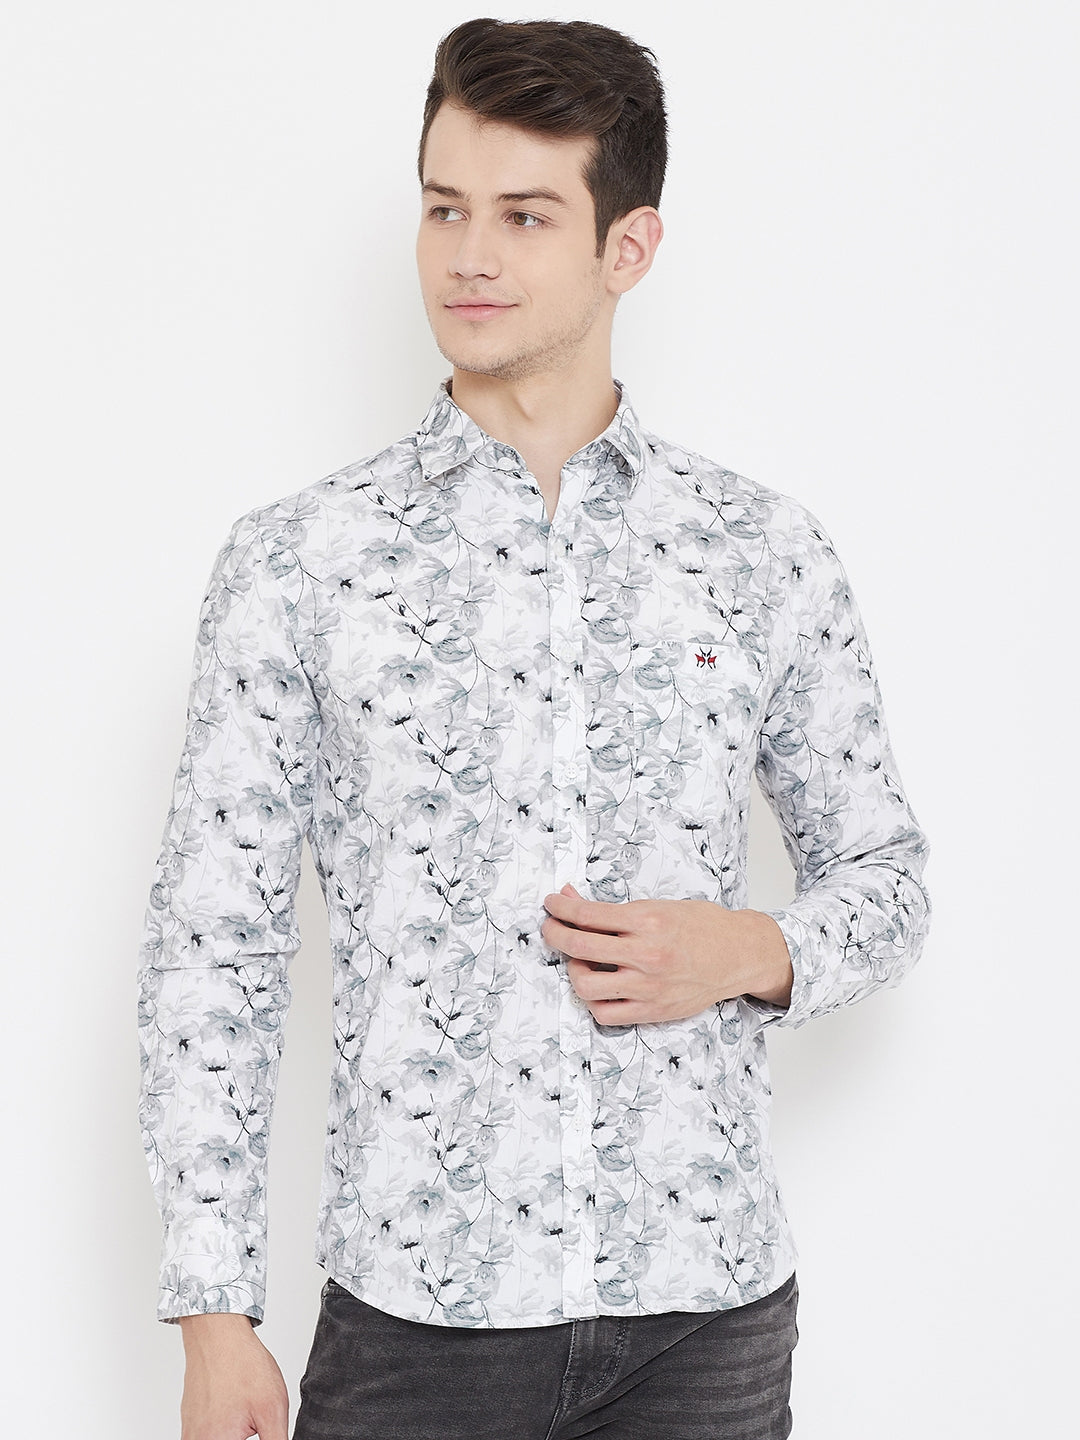 Grey Floral Spread Collar Slim Fit Shirt - Men Shirts